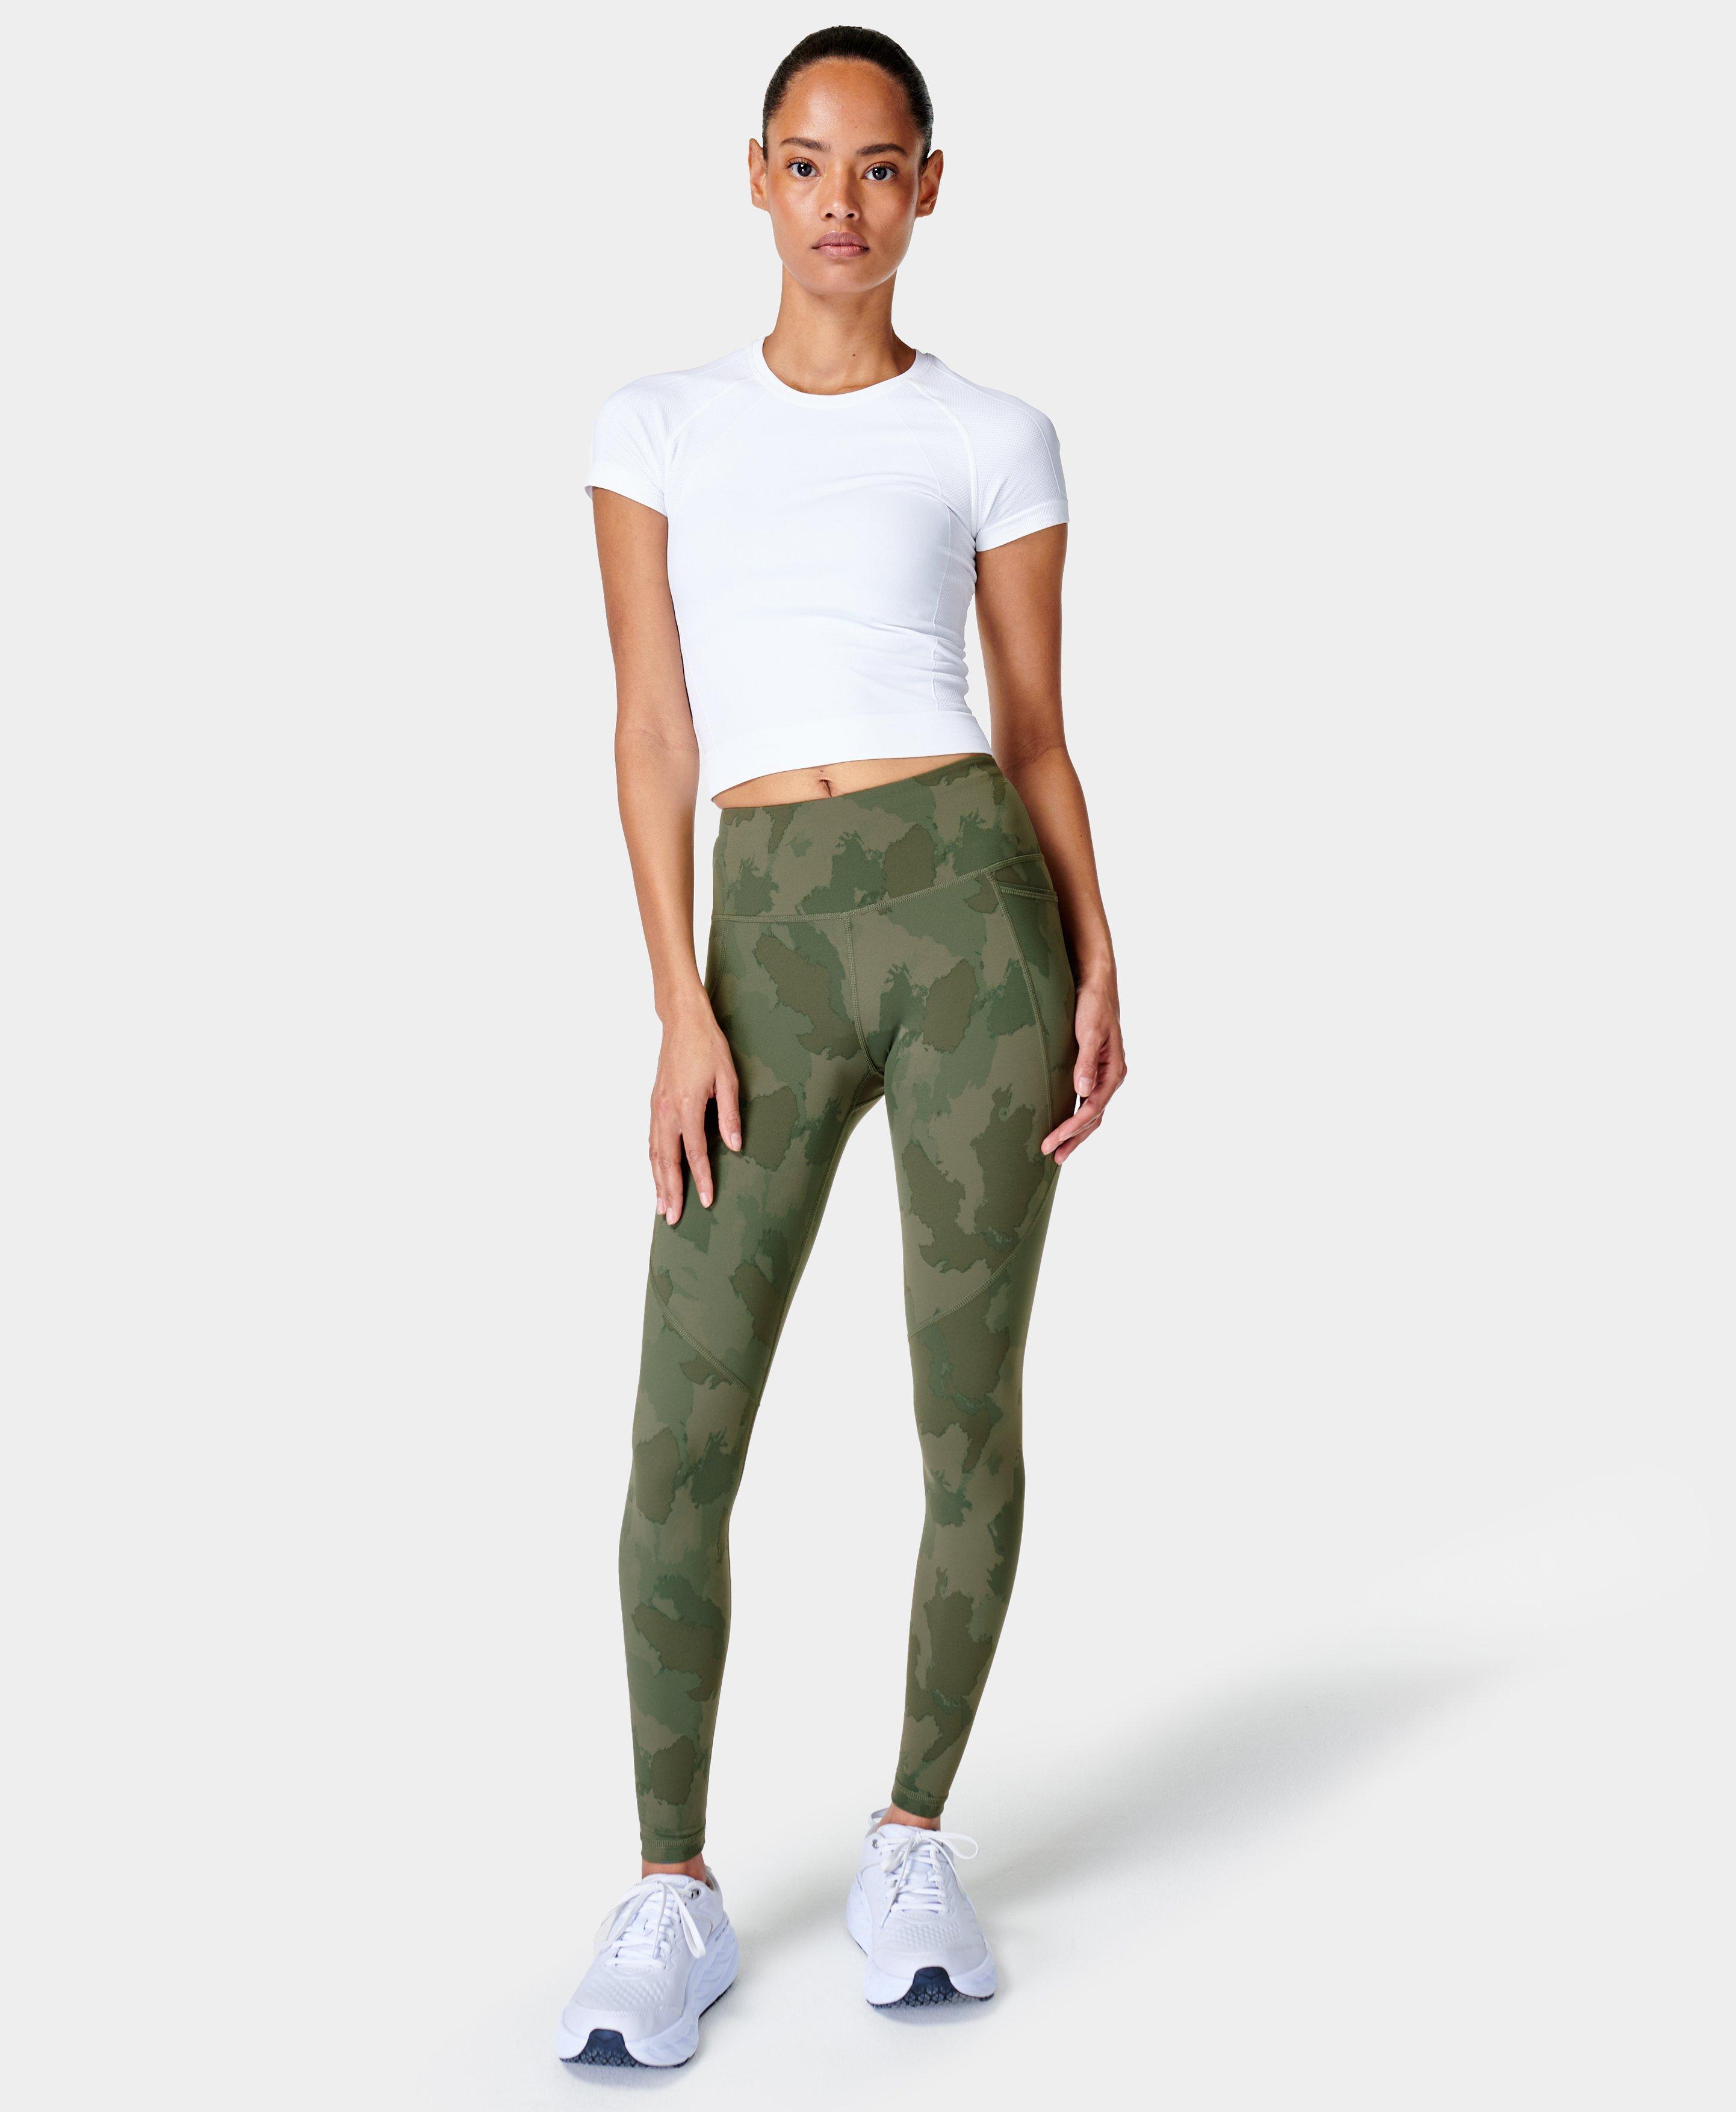 Sweaty Betty Power 7/8 Gym Leggings, Green Paint Camo Print at